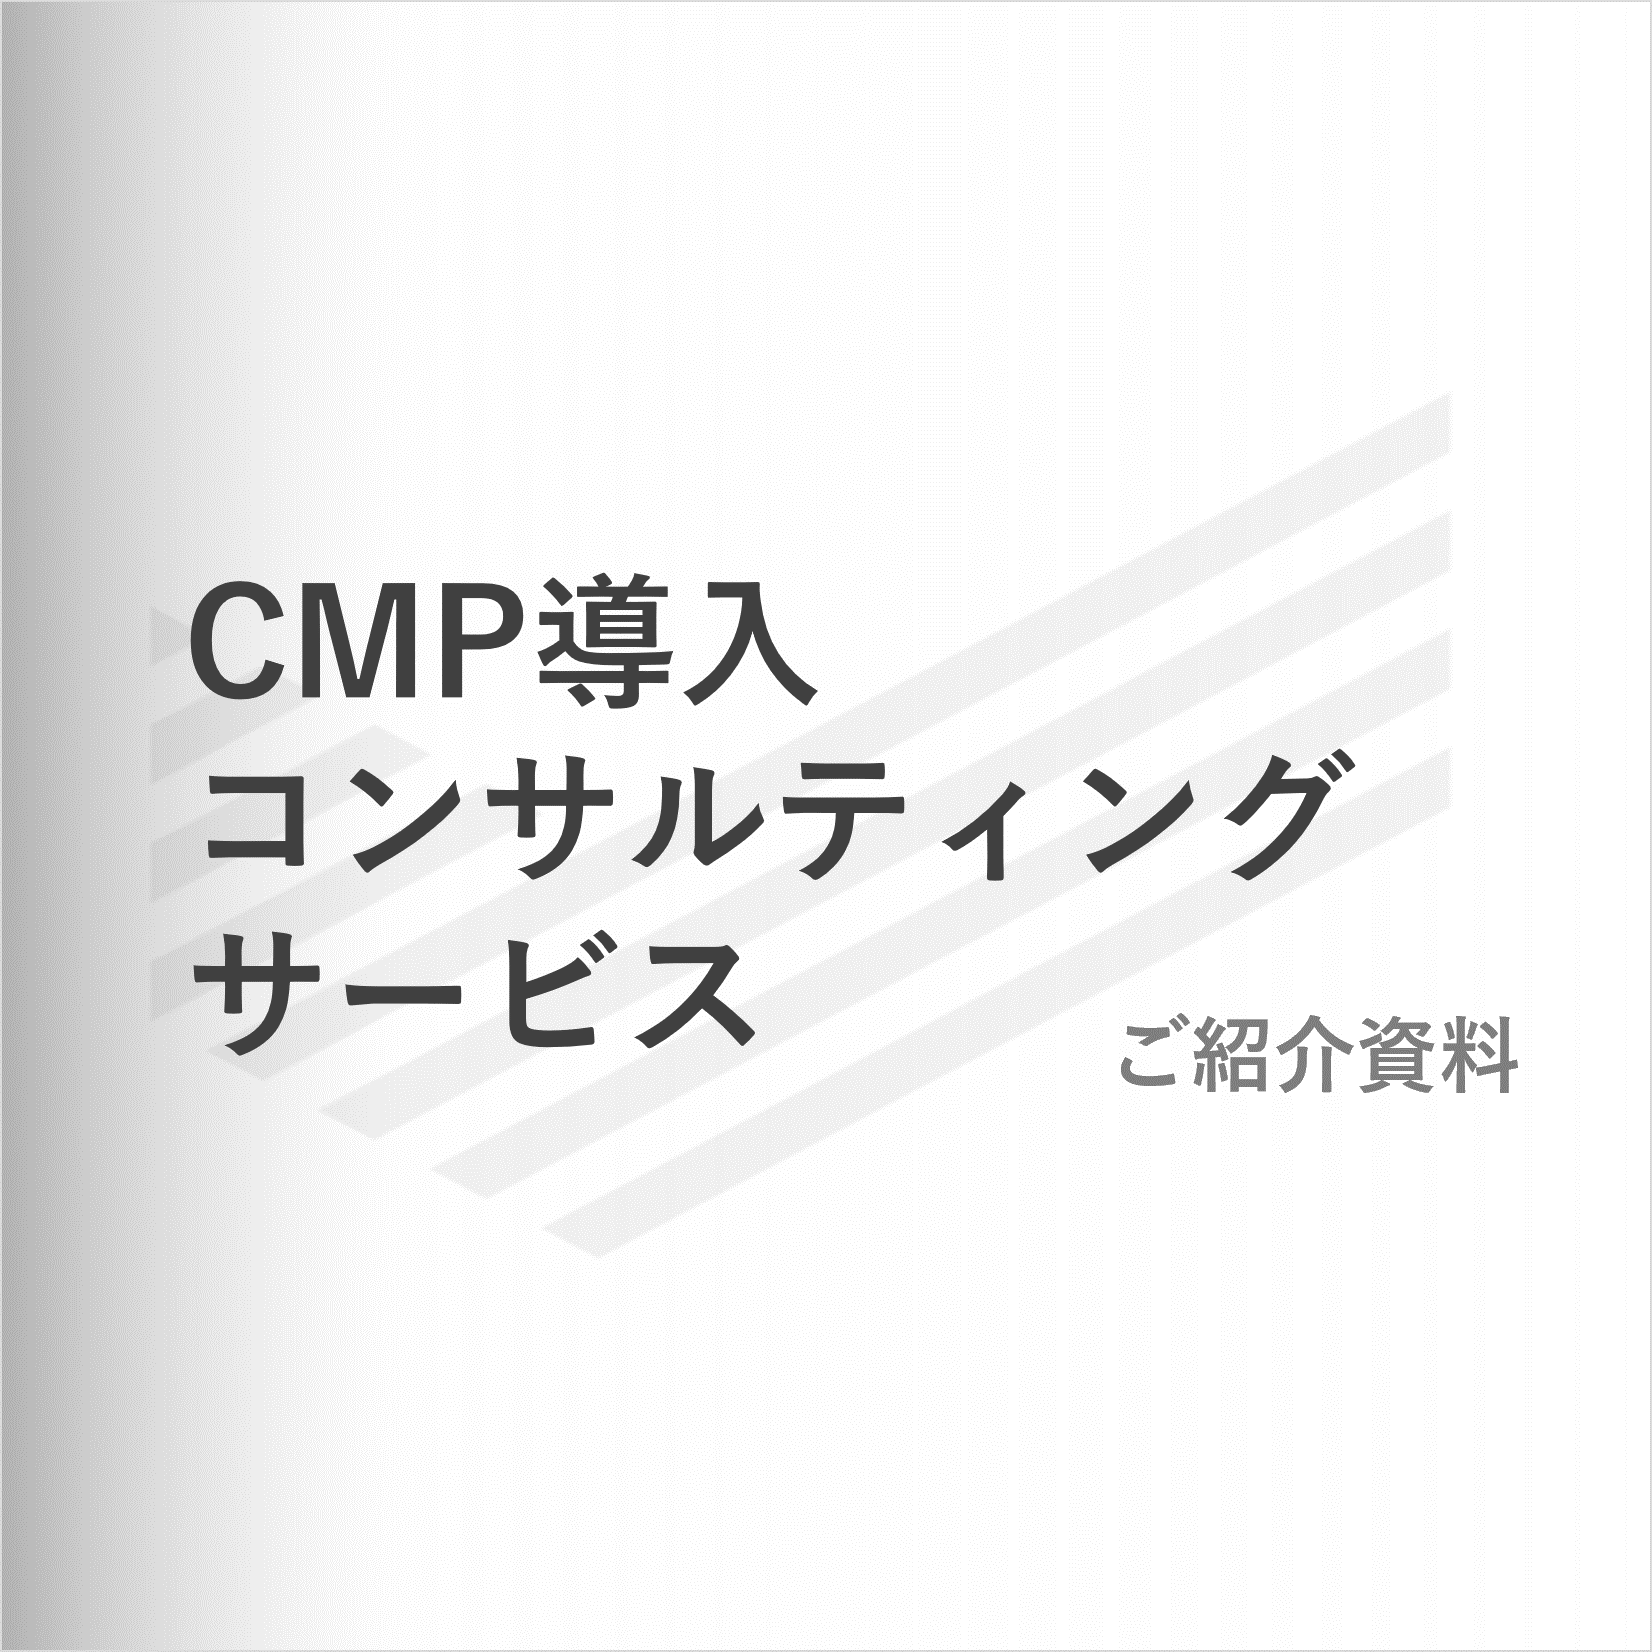 CMP導入コンサルティングサービス ご紹介資料